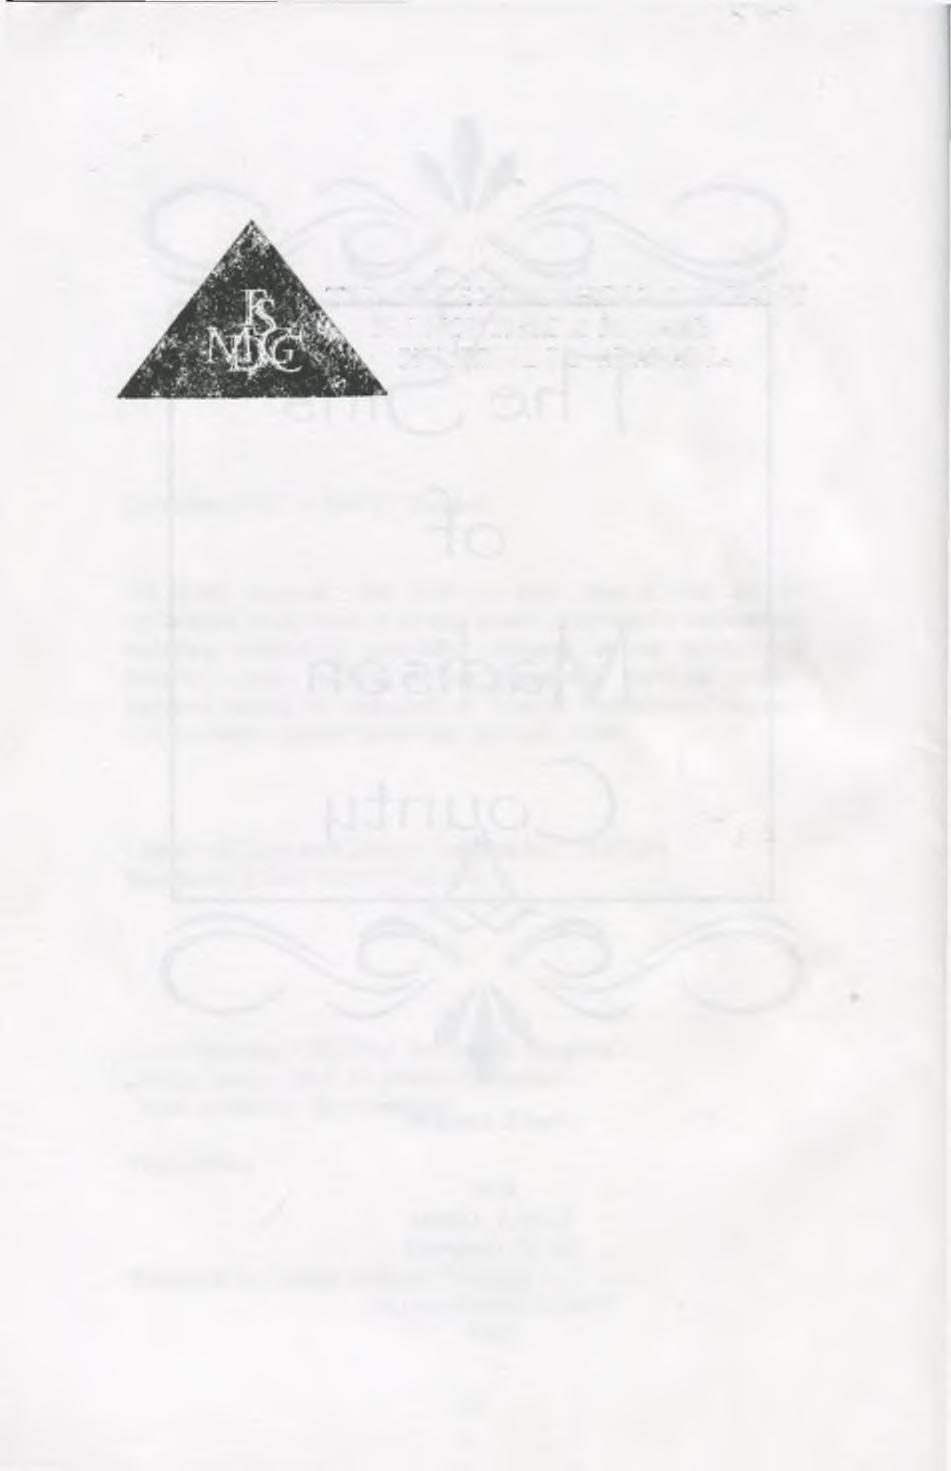 IRIANGli PUBLISHING COMPANY 105 NORTHSIDF SQUARE HUNTSVILLE. ALABAMA Copyright 1999 by Fred B.